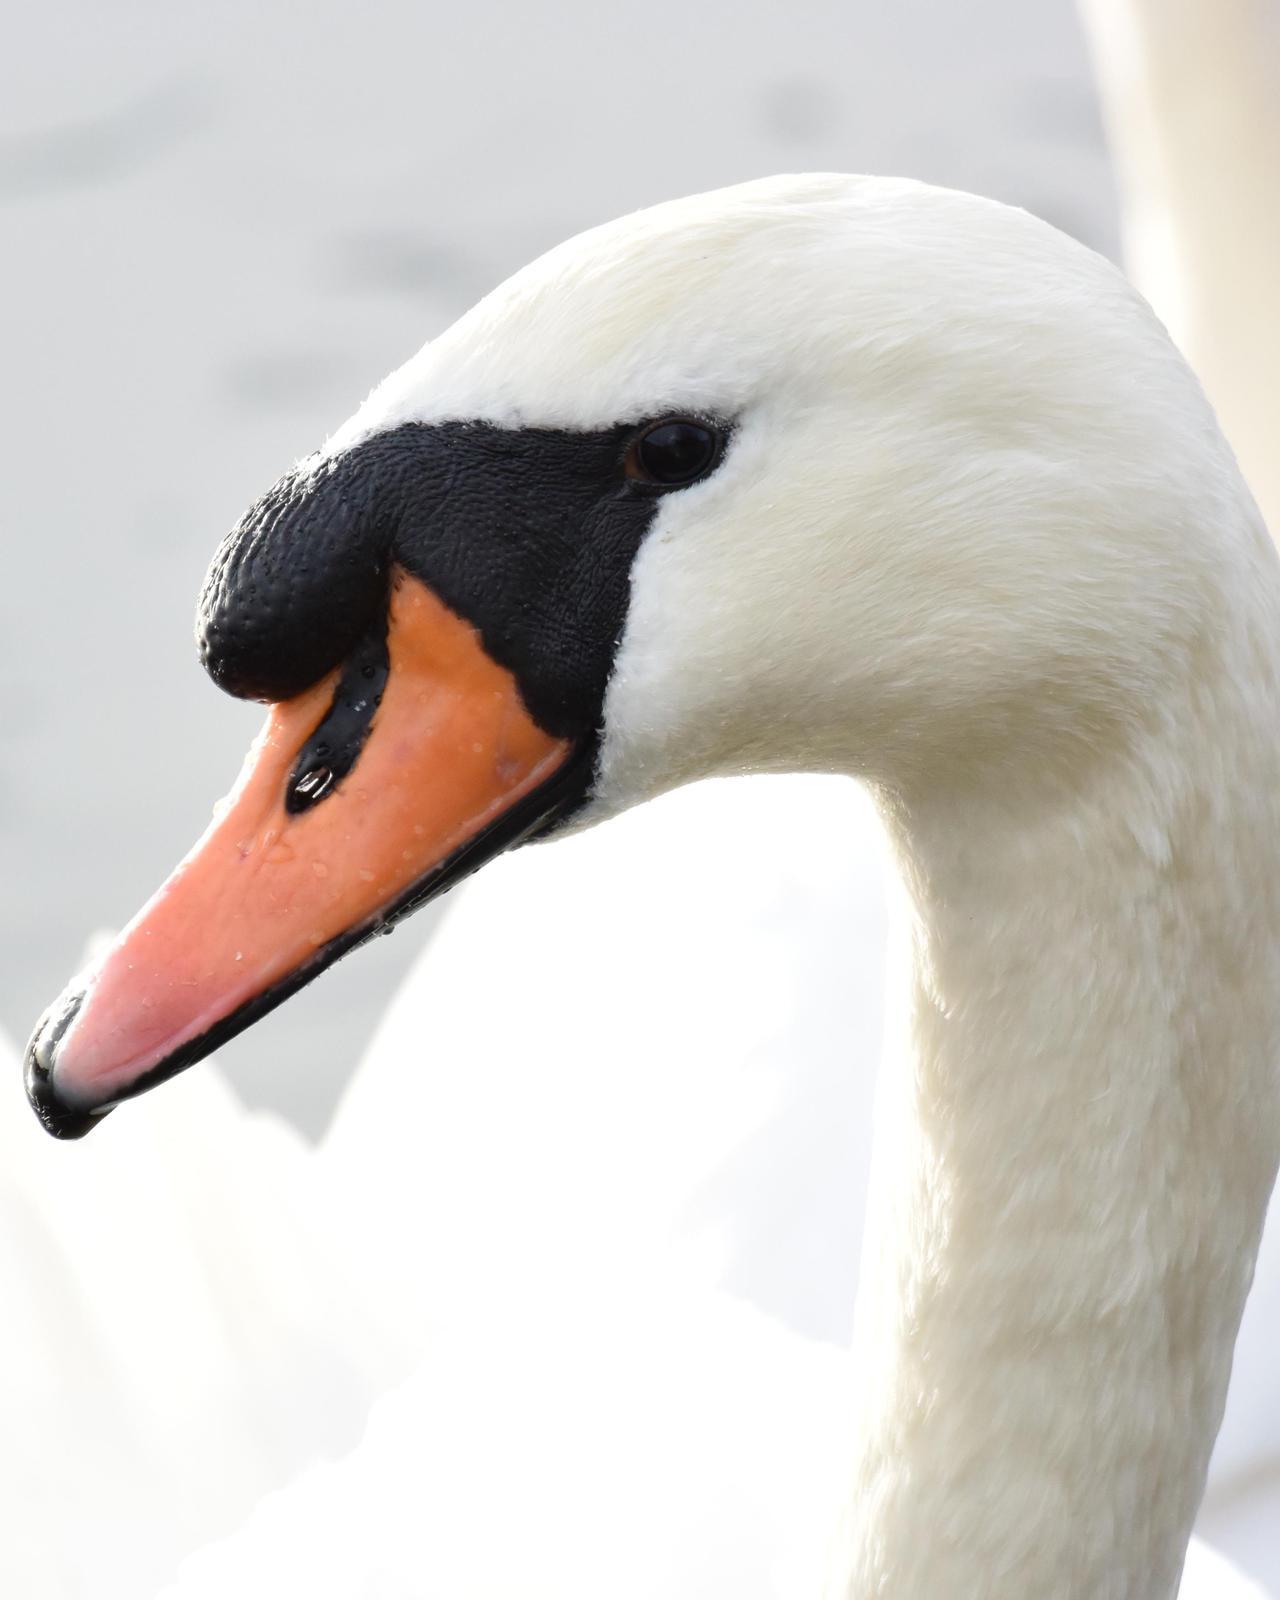 Mute Swan Photo by Steve Percival